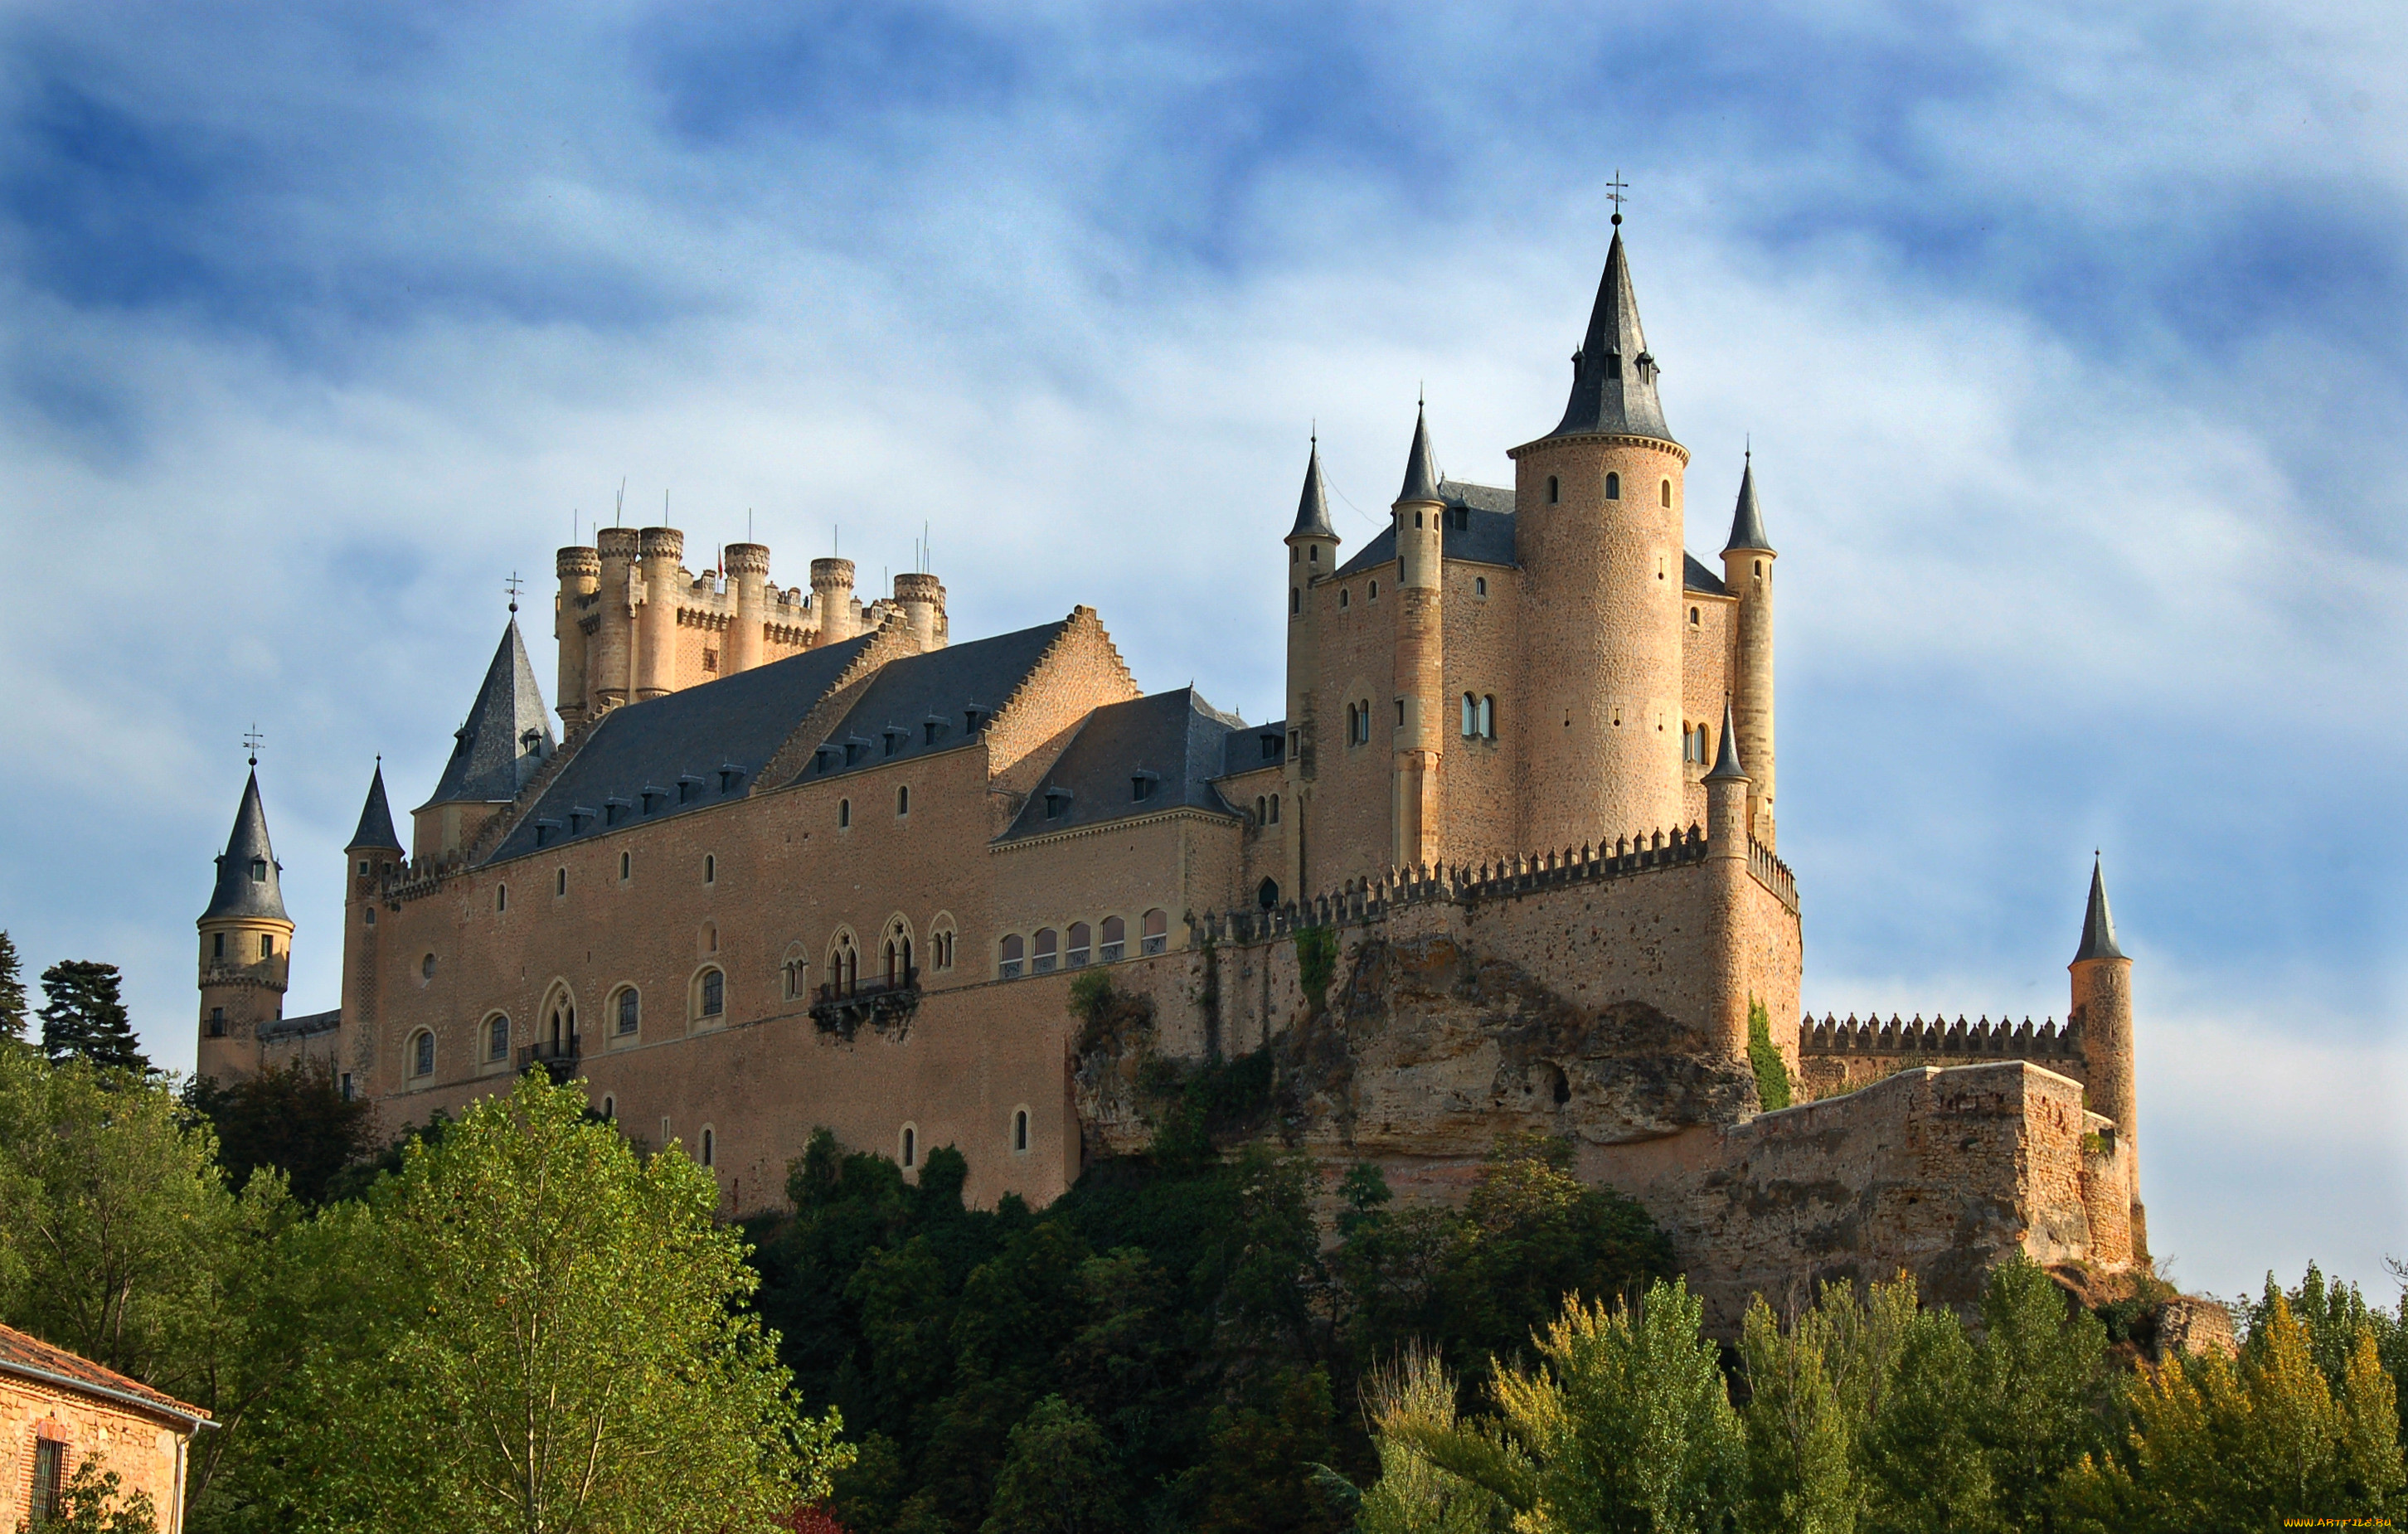 Замок. Замок Алькасар Испания. Дворец Алькасар в Сеговии, Испания. Королевский замок Алькасар (Испания). Дворец крепость Алькасар в Испании.